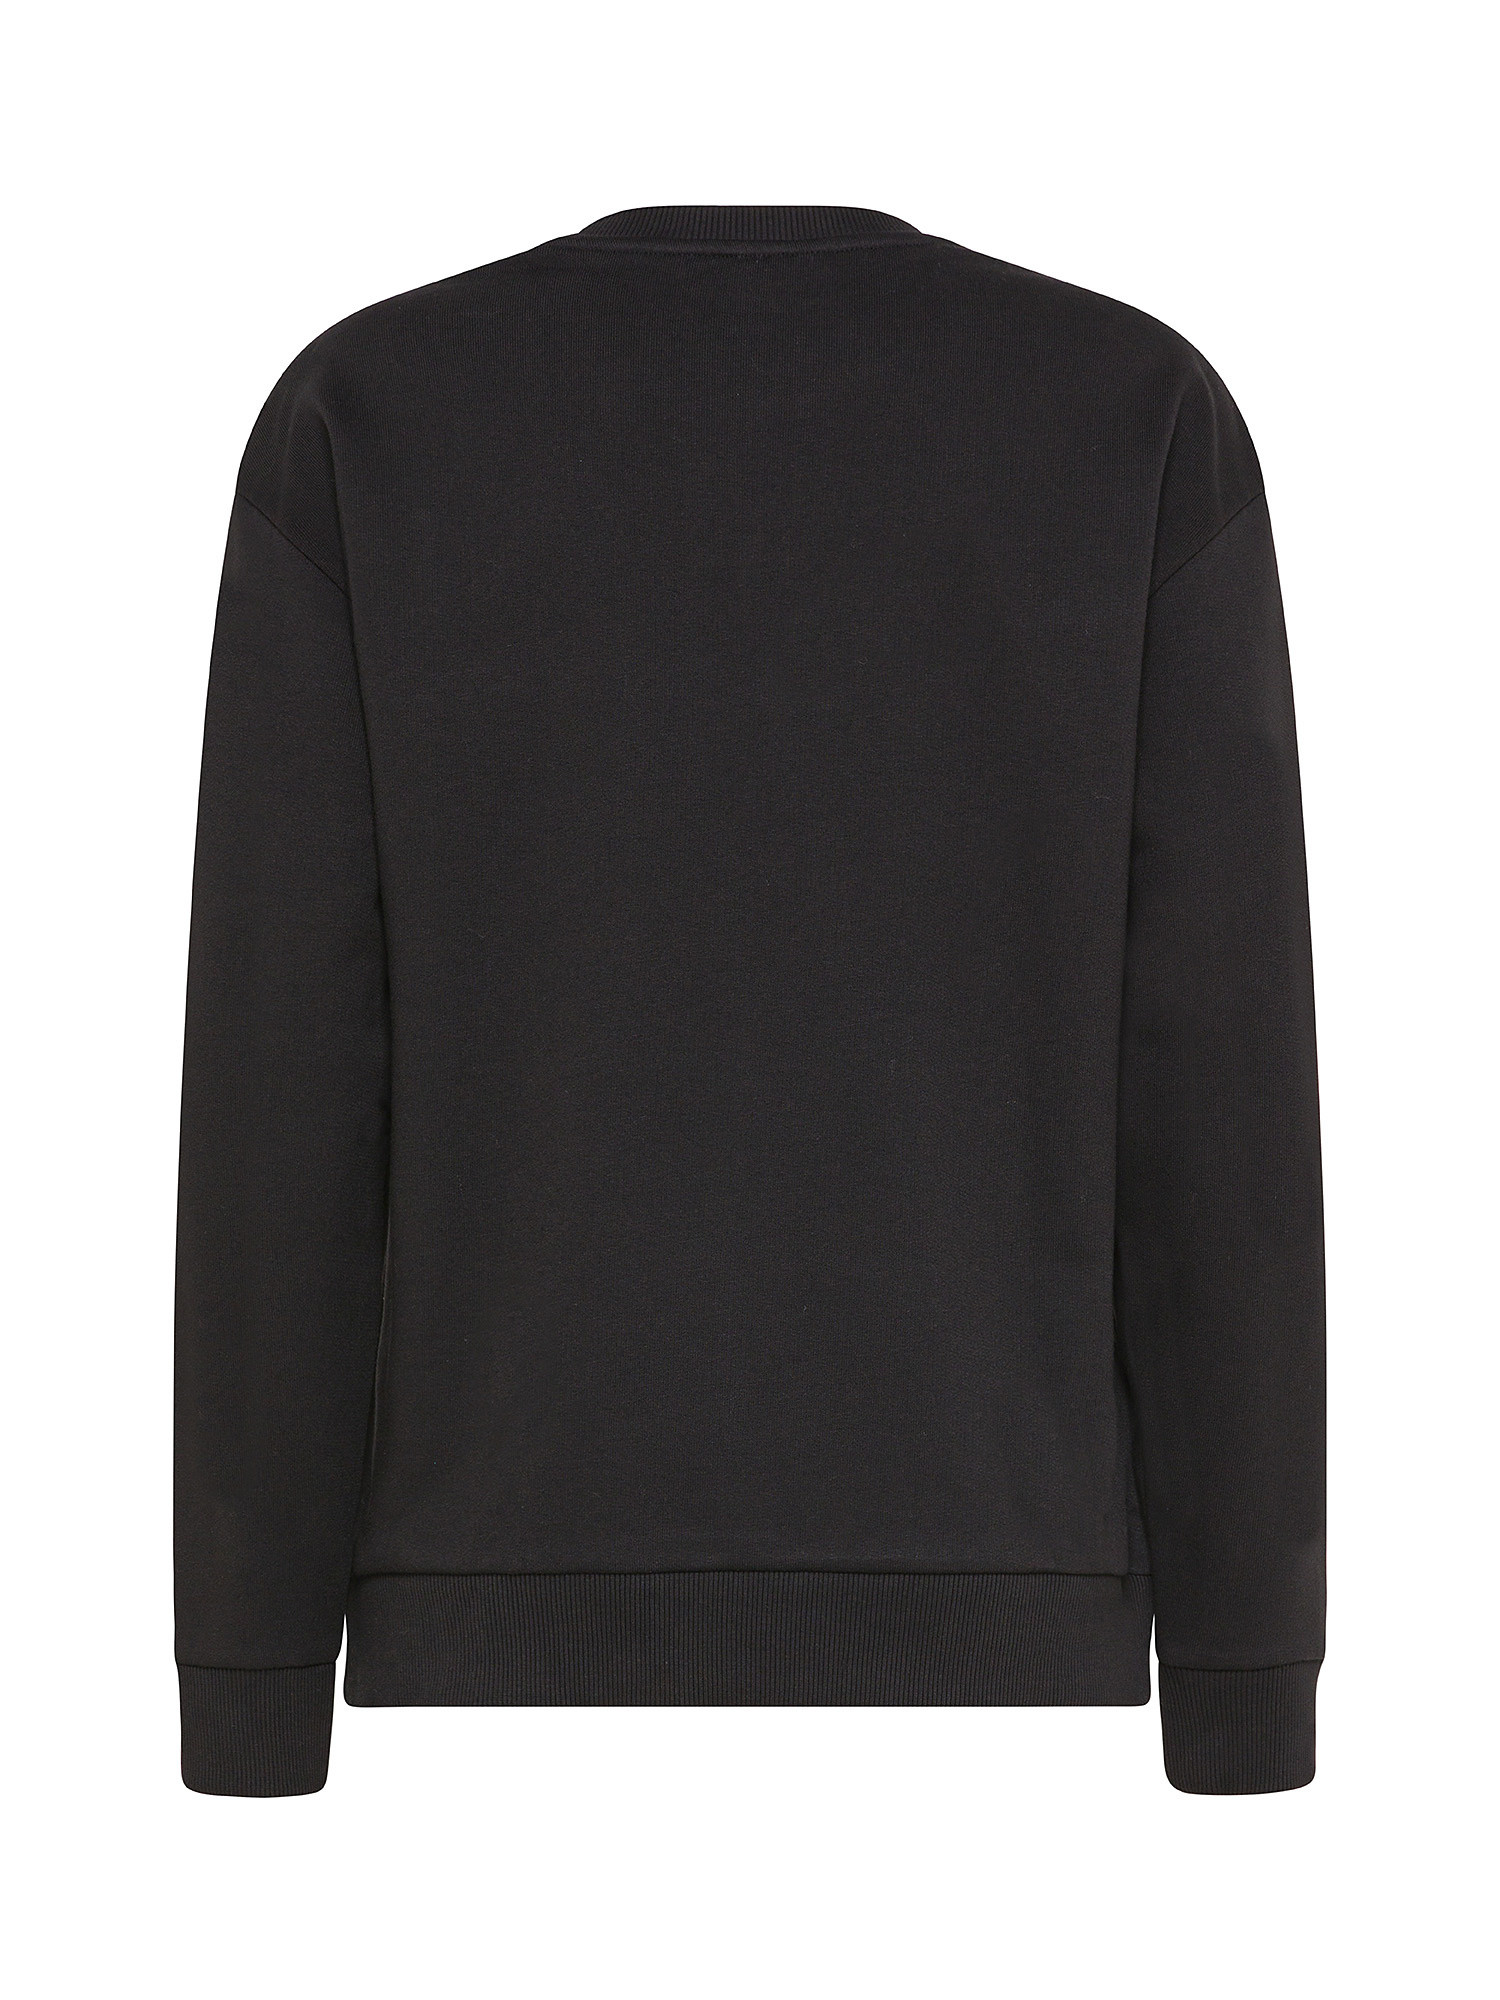 Armani Exchange - Sweatshirt with logo, Black, large image number 1